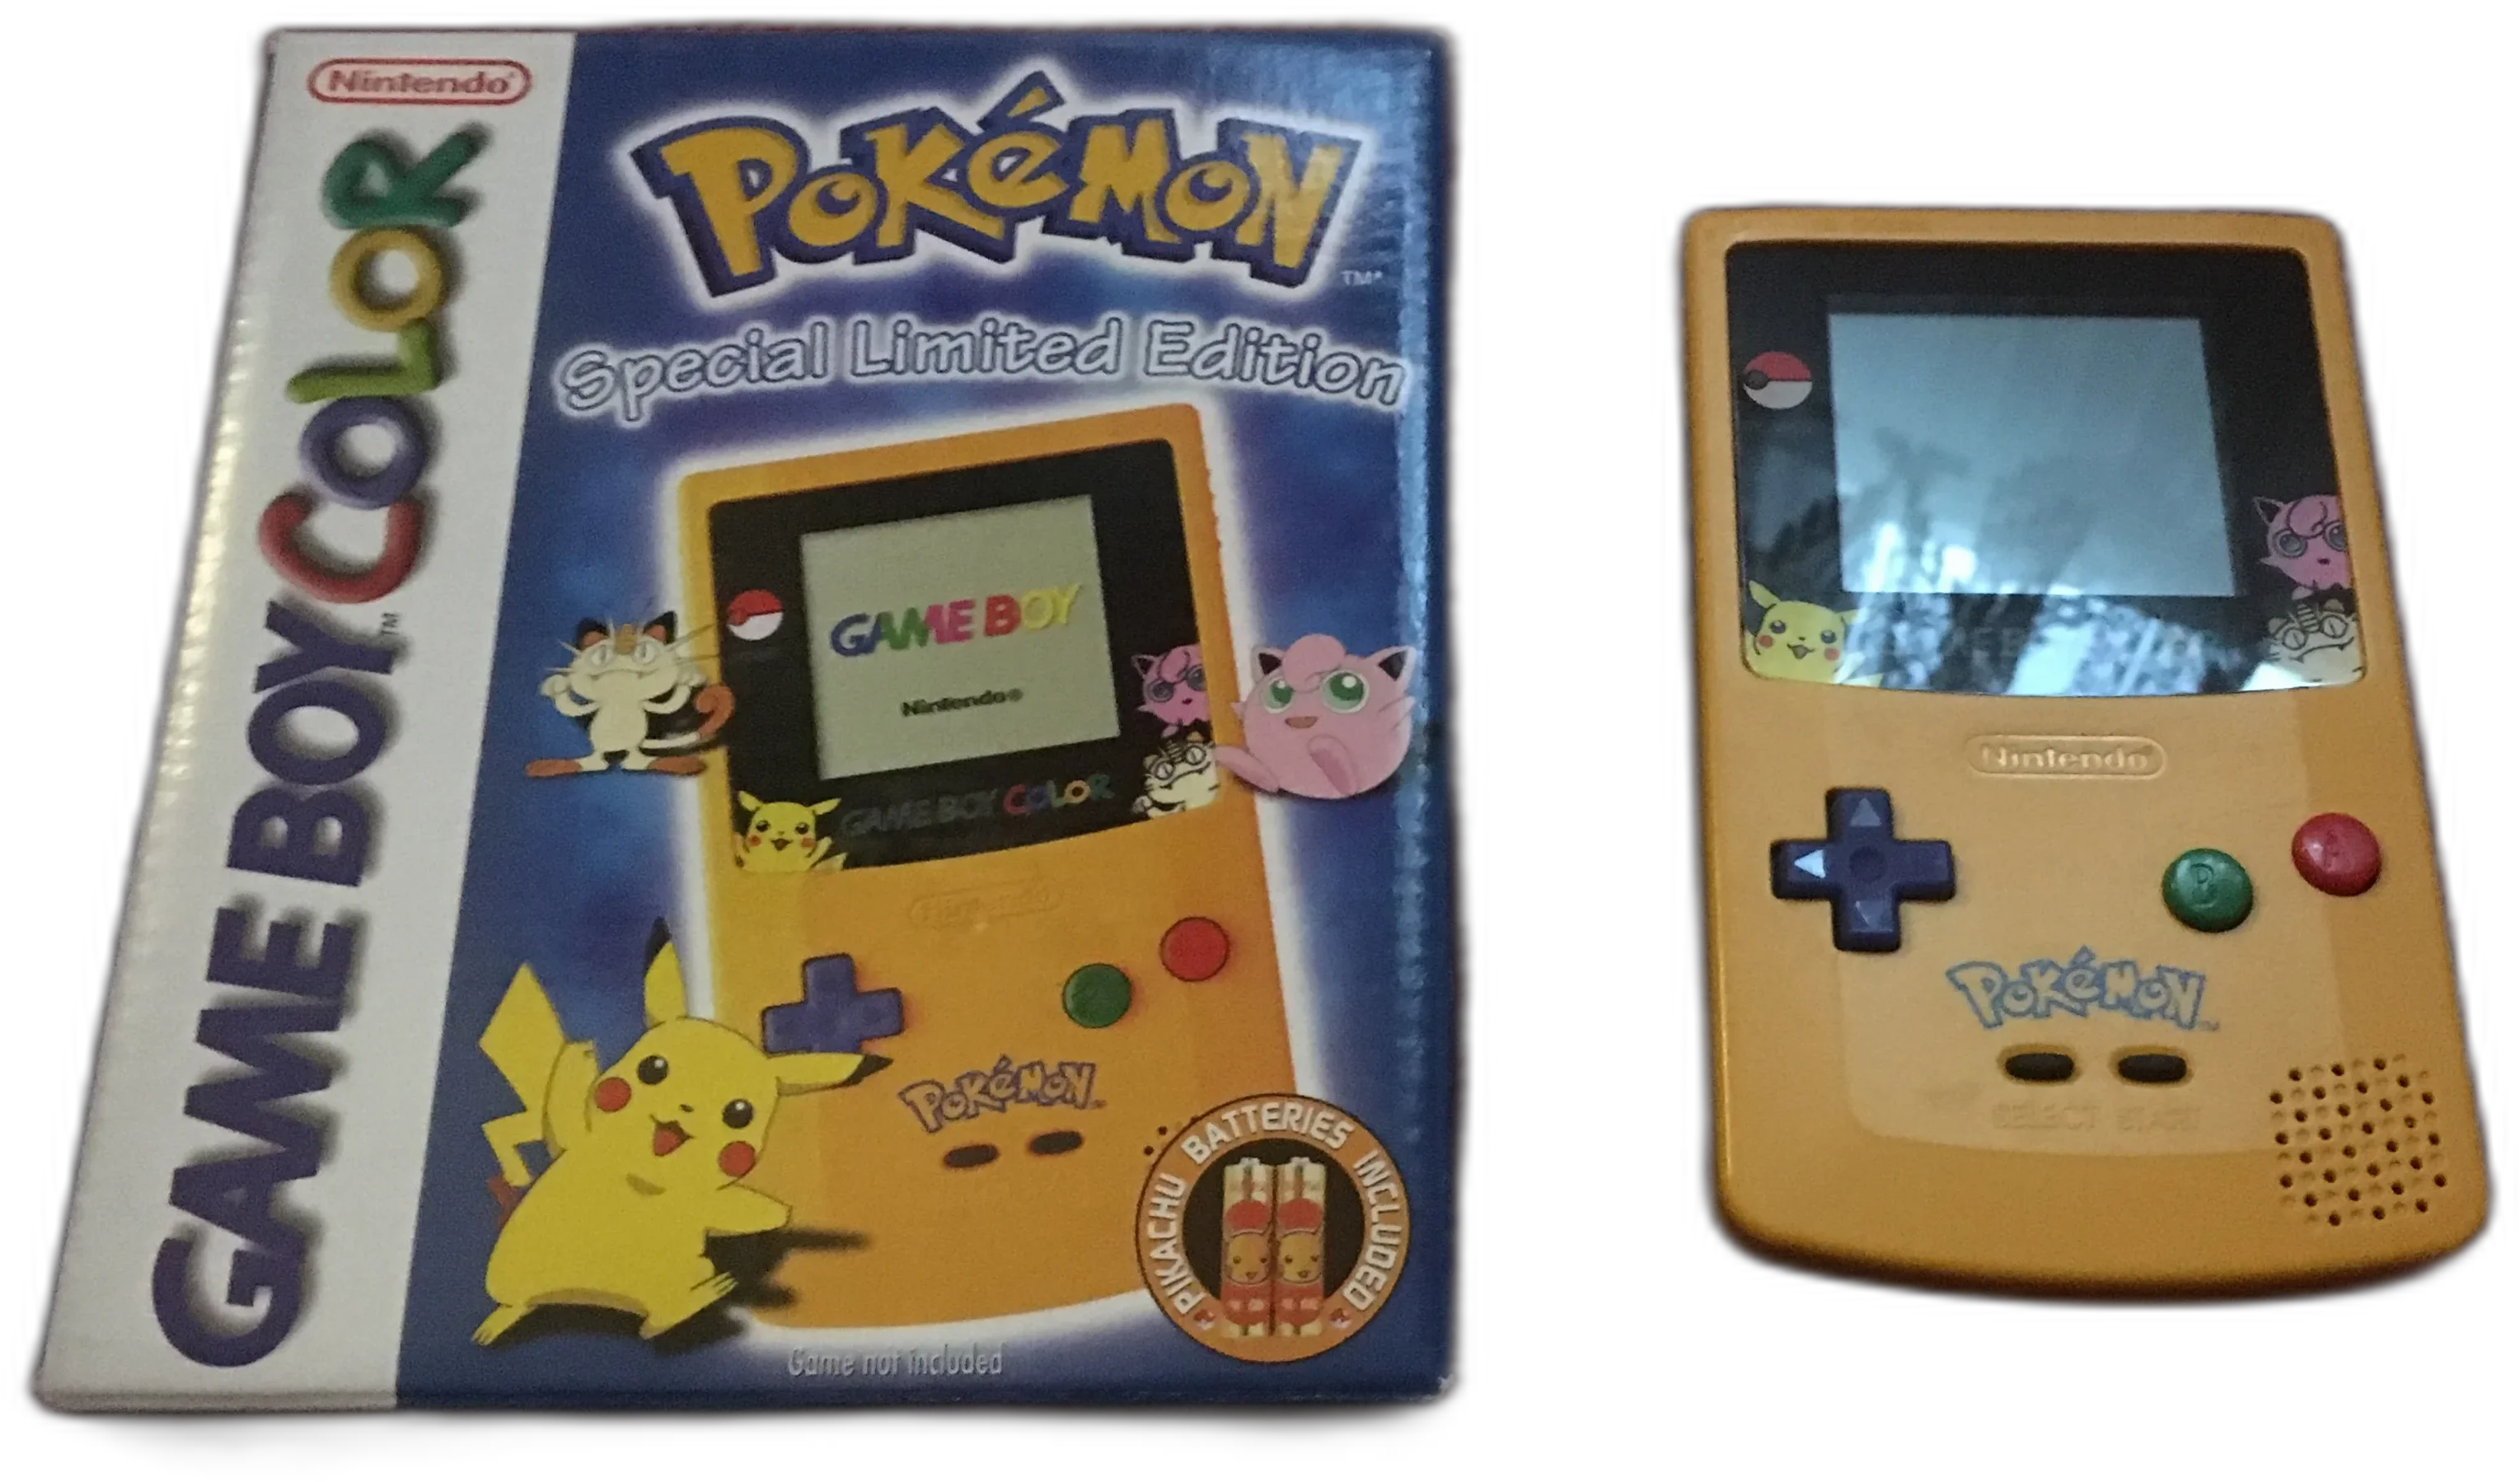  Nintendo Game Boy Color Pokemon Console [AUS]